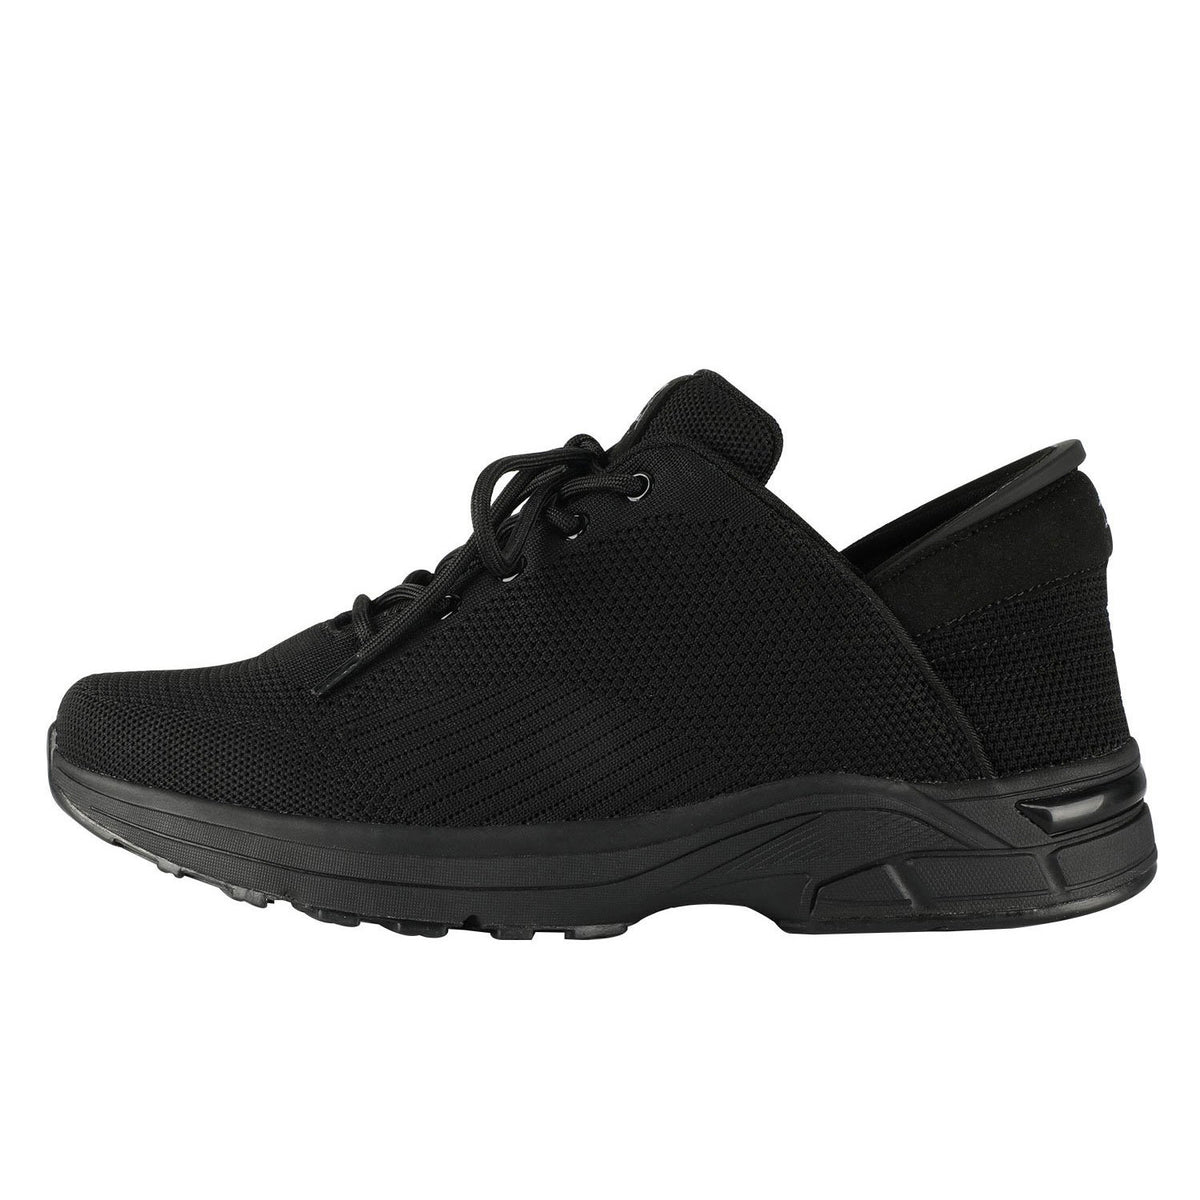 Jet Black (Medium and Extra Wide 4E Available) (Sizes 7-16) – Zeba Shoes